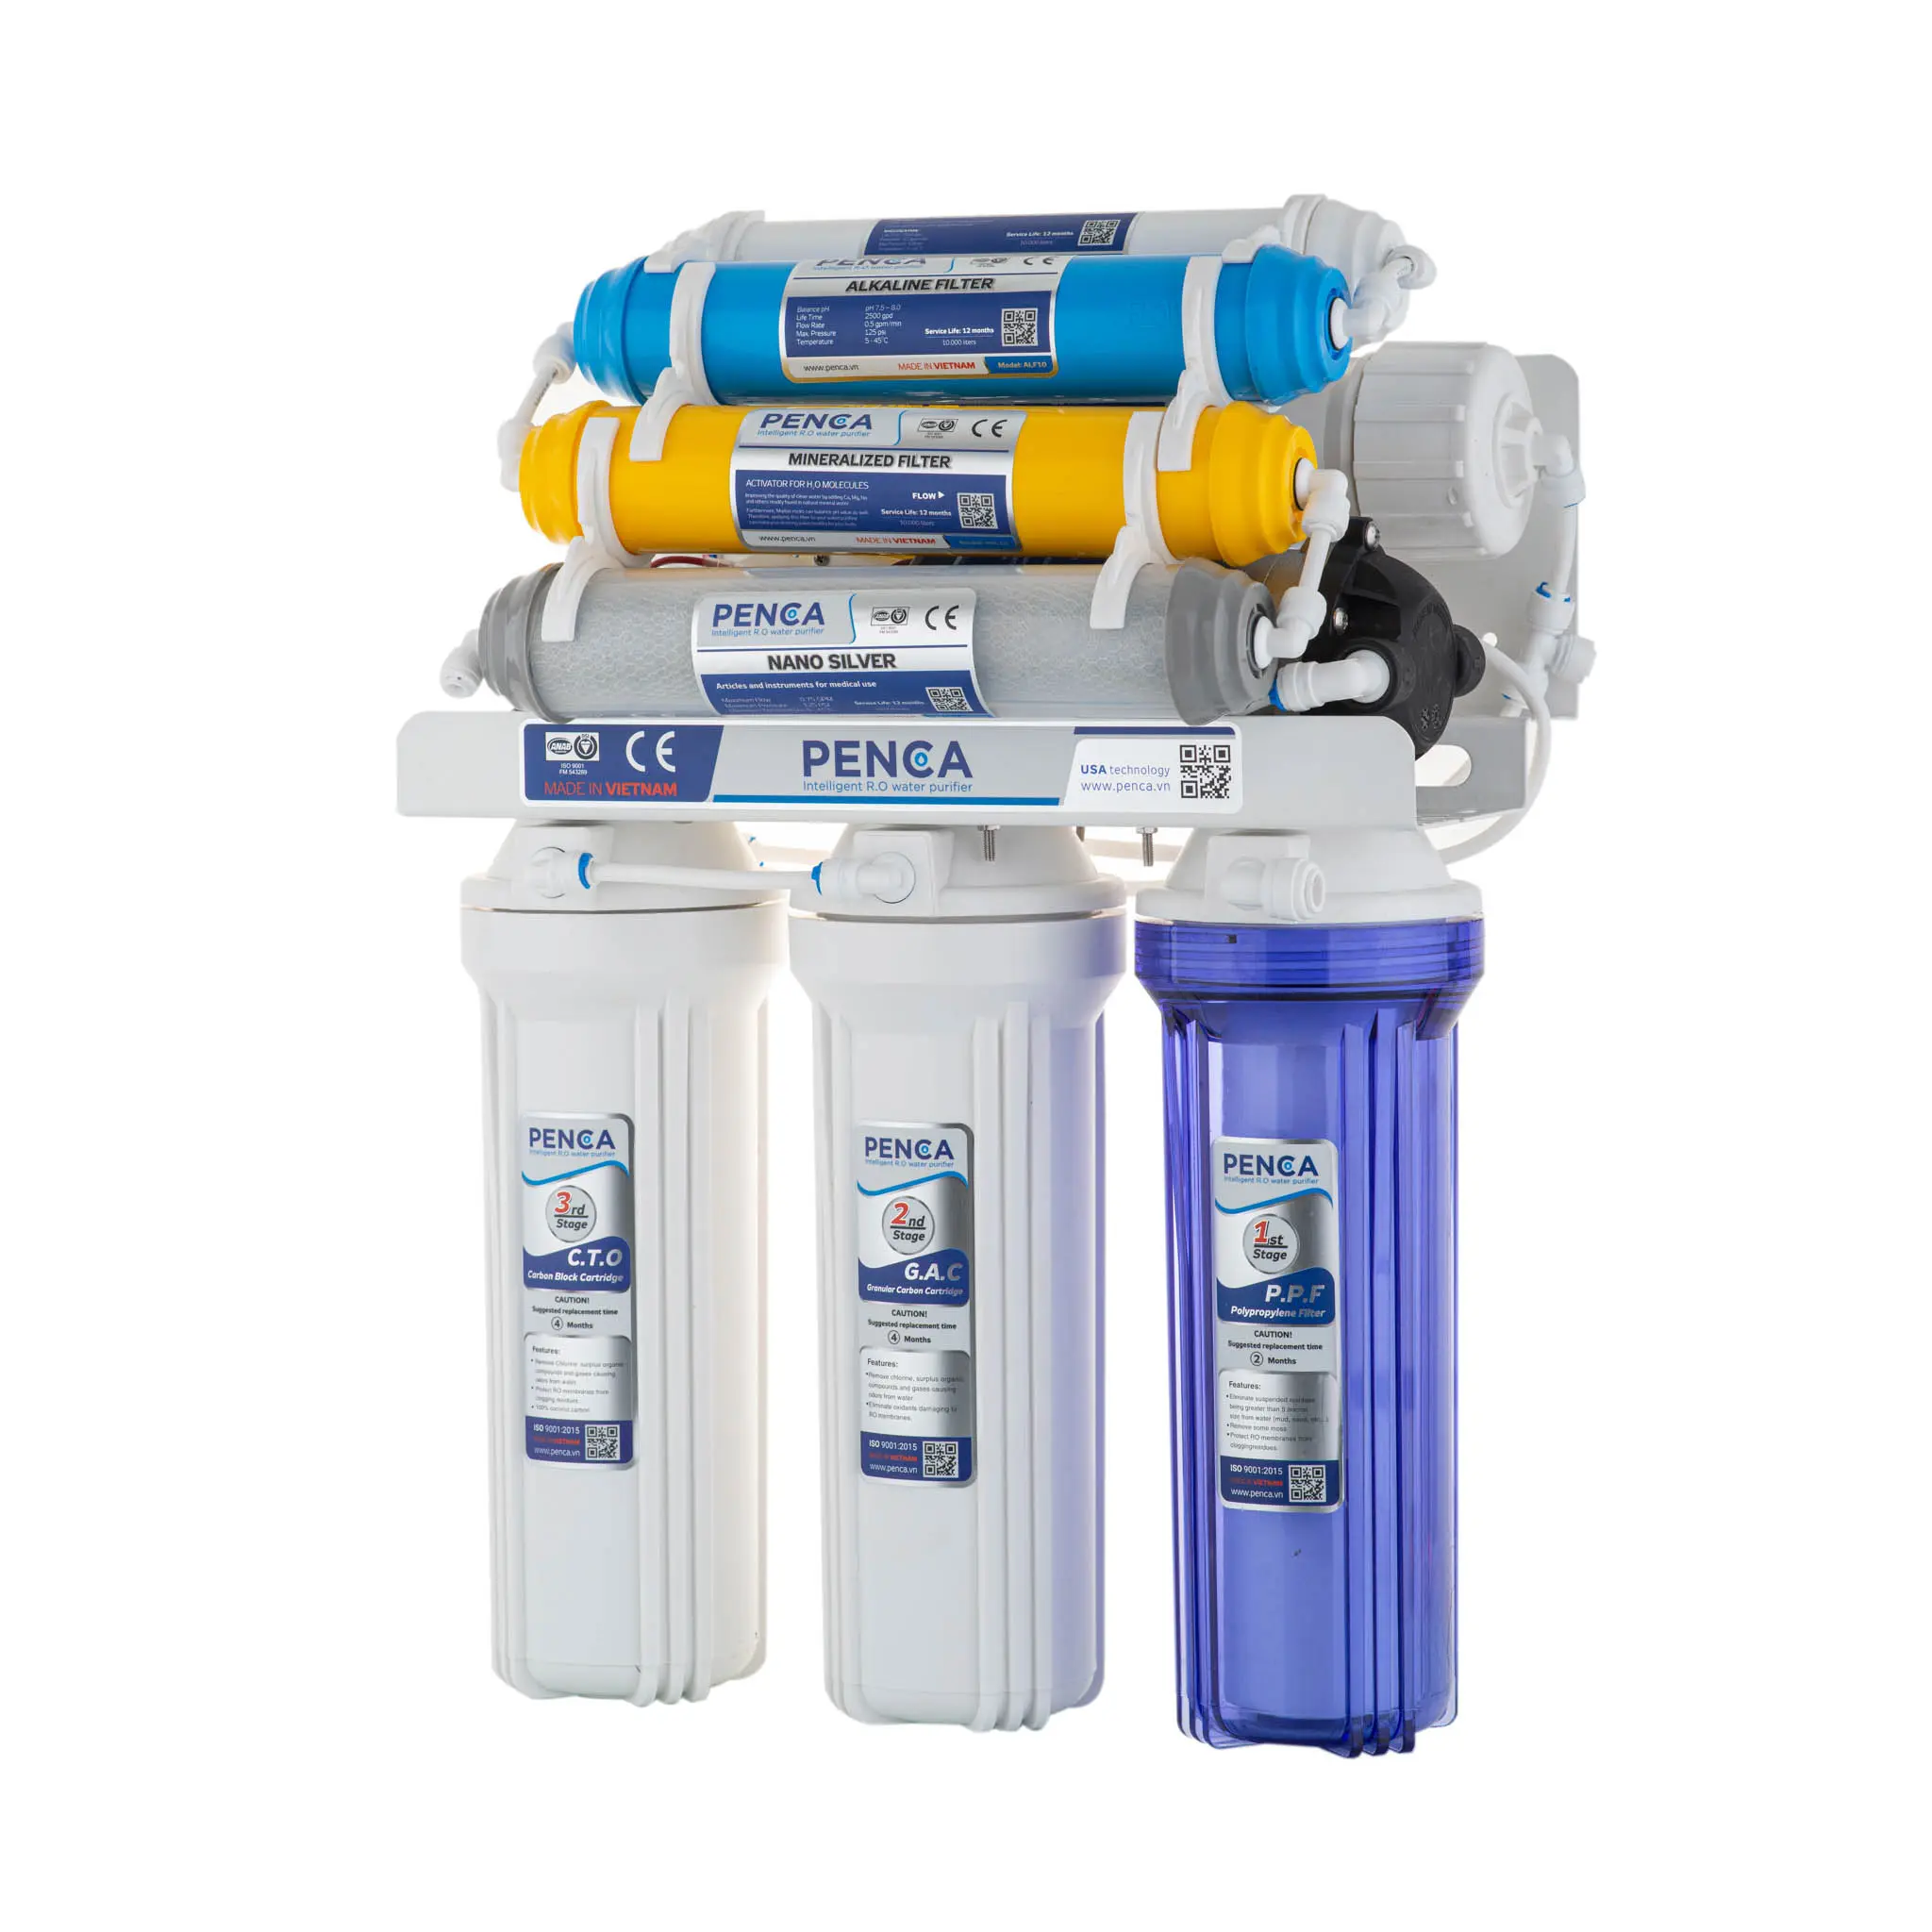 Filtro de agua RO de alta calidad, sistema de purificación de agua para el hogar, bebida alcalina, máquina purificadora de agua de ósmosis inversa de 8 etapas